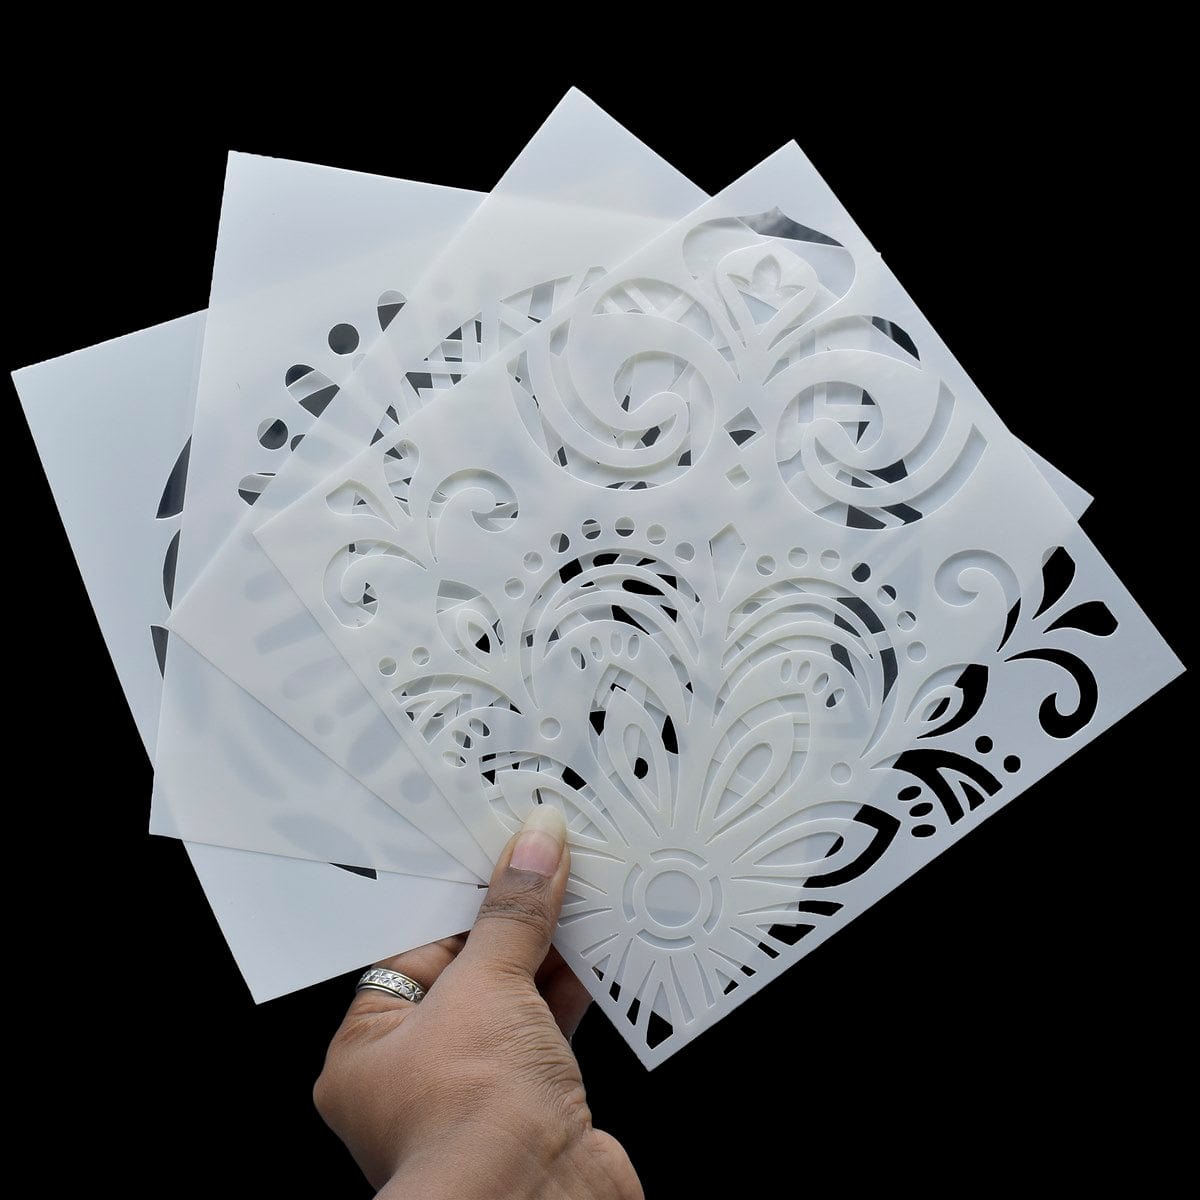 jags-mumbai Stencil Jags Stencil Plastic 6x6 4Pcs Set - Creative Craft Tool for Scrapbooking and Art Projects